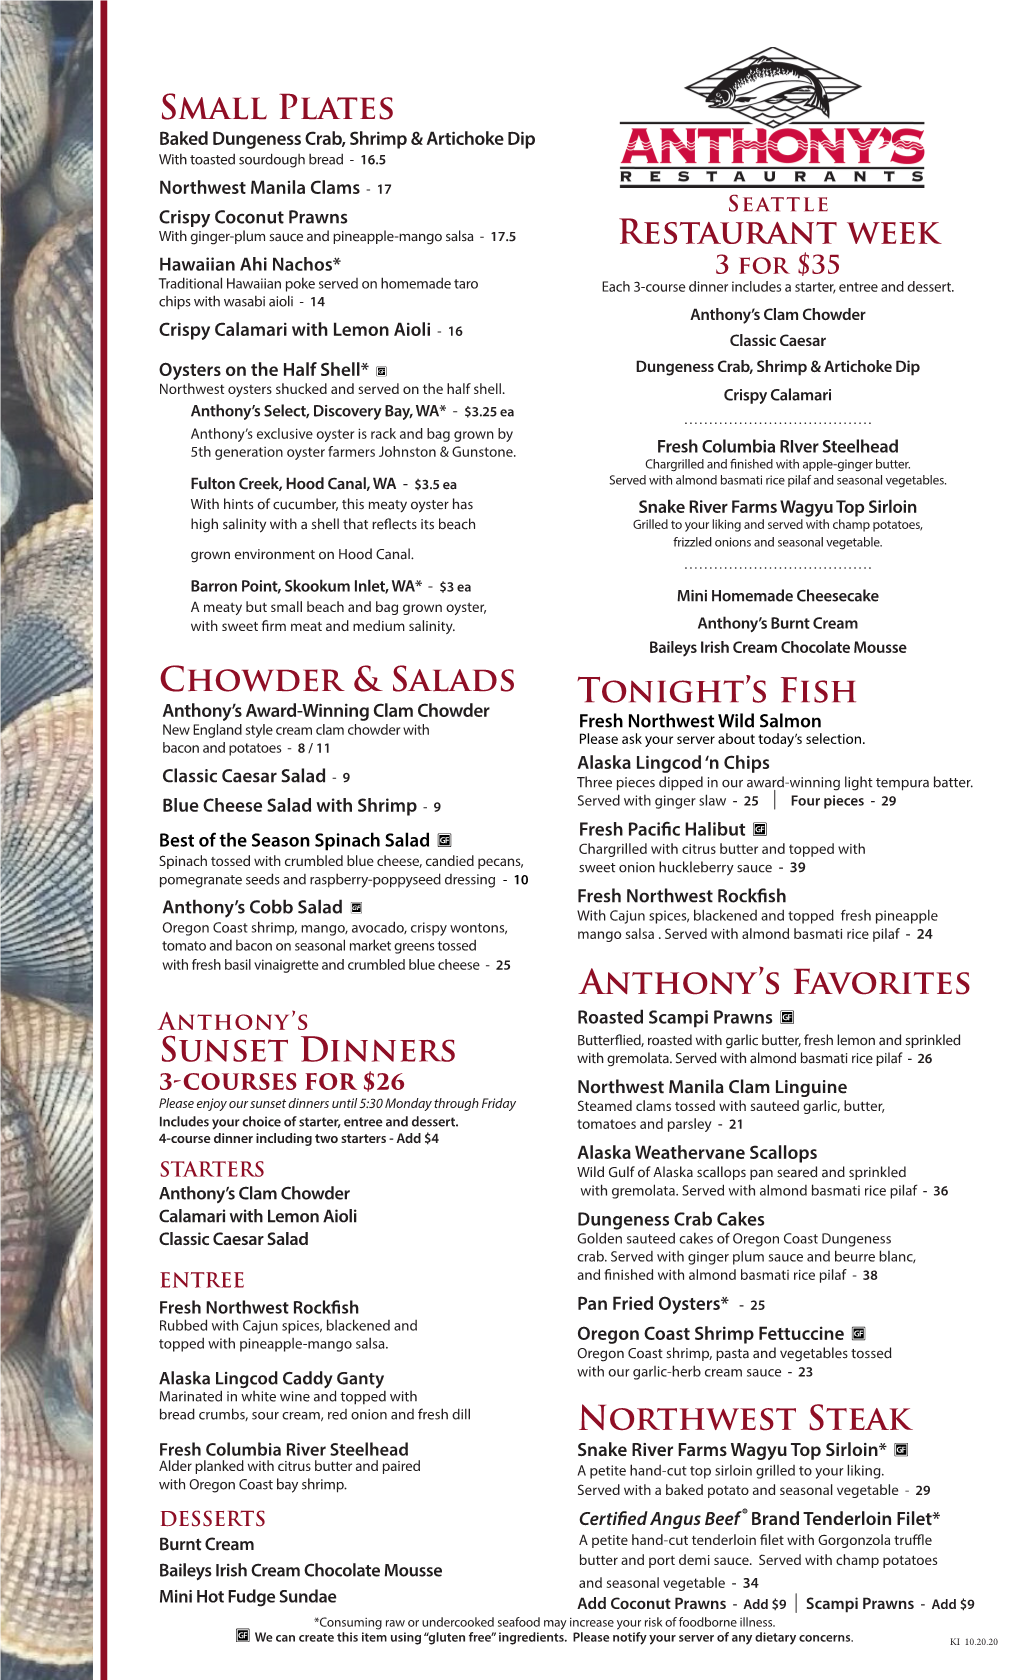 Small Plates Chowder & Salads Sunset Dinners Restaurant Week Tonight's Fish Anthony's Favorites Northwest Steak